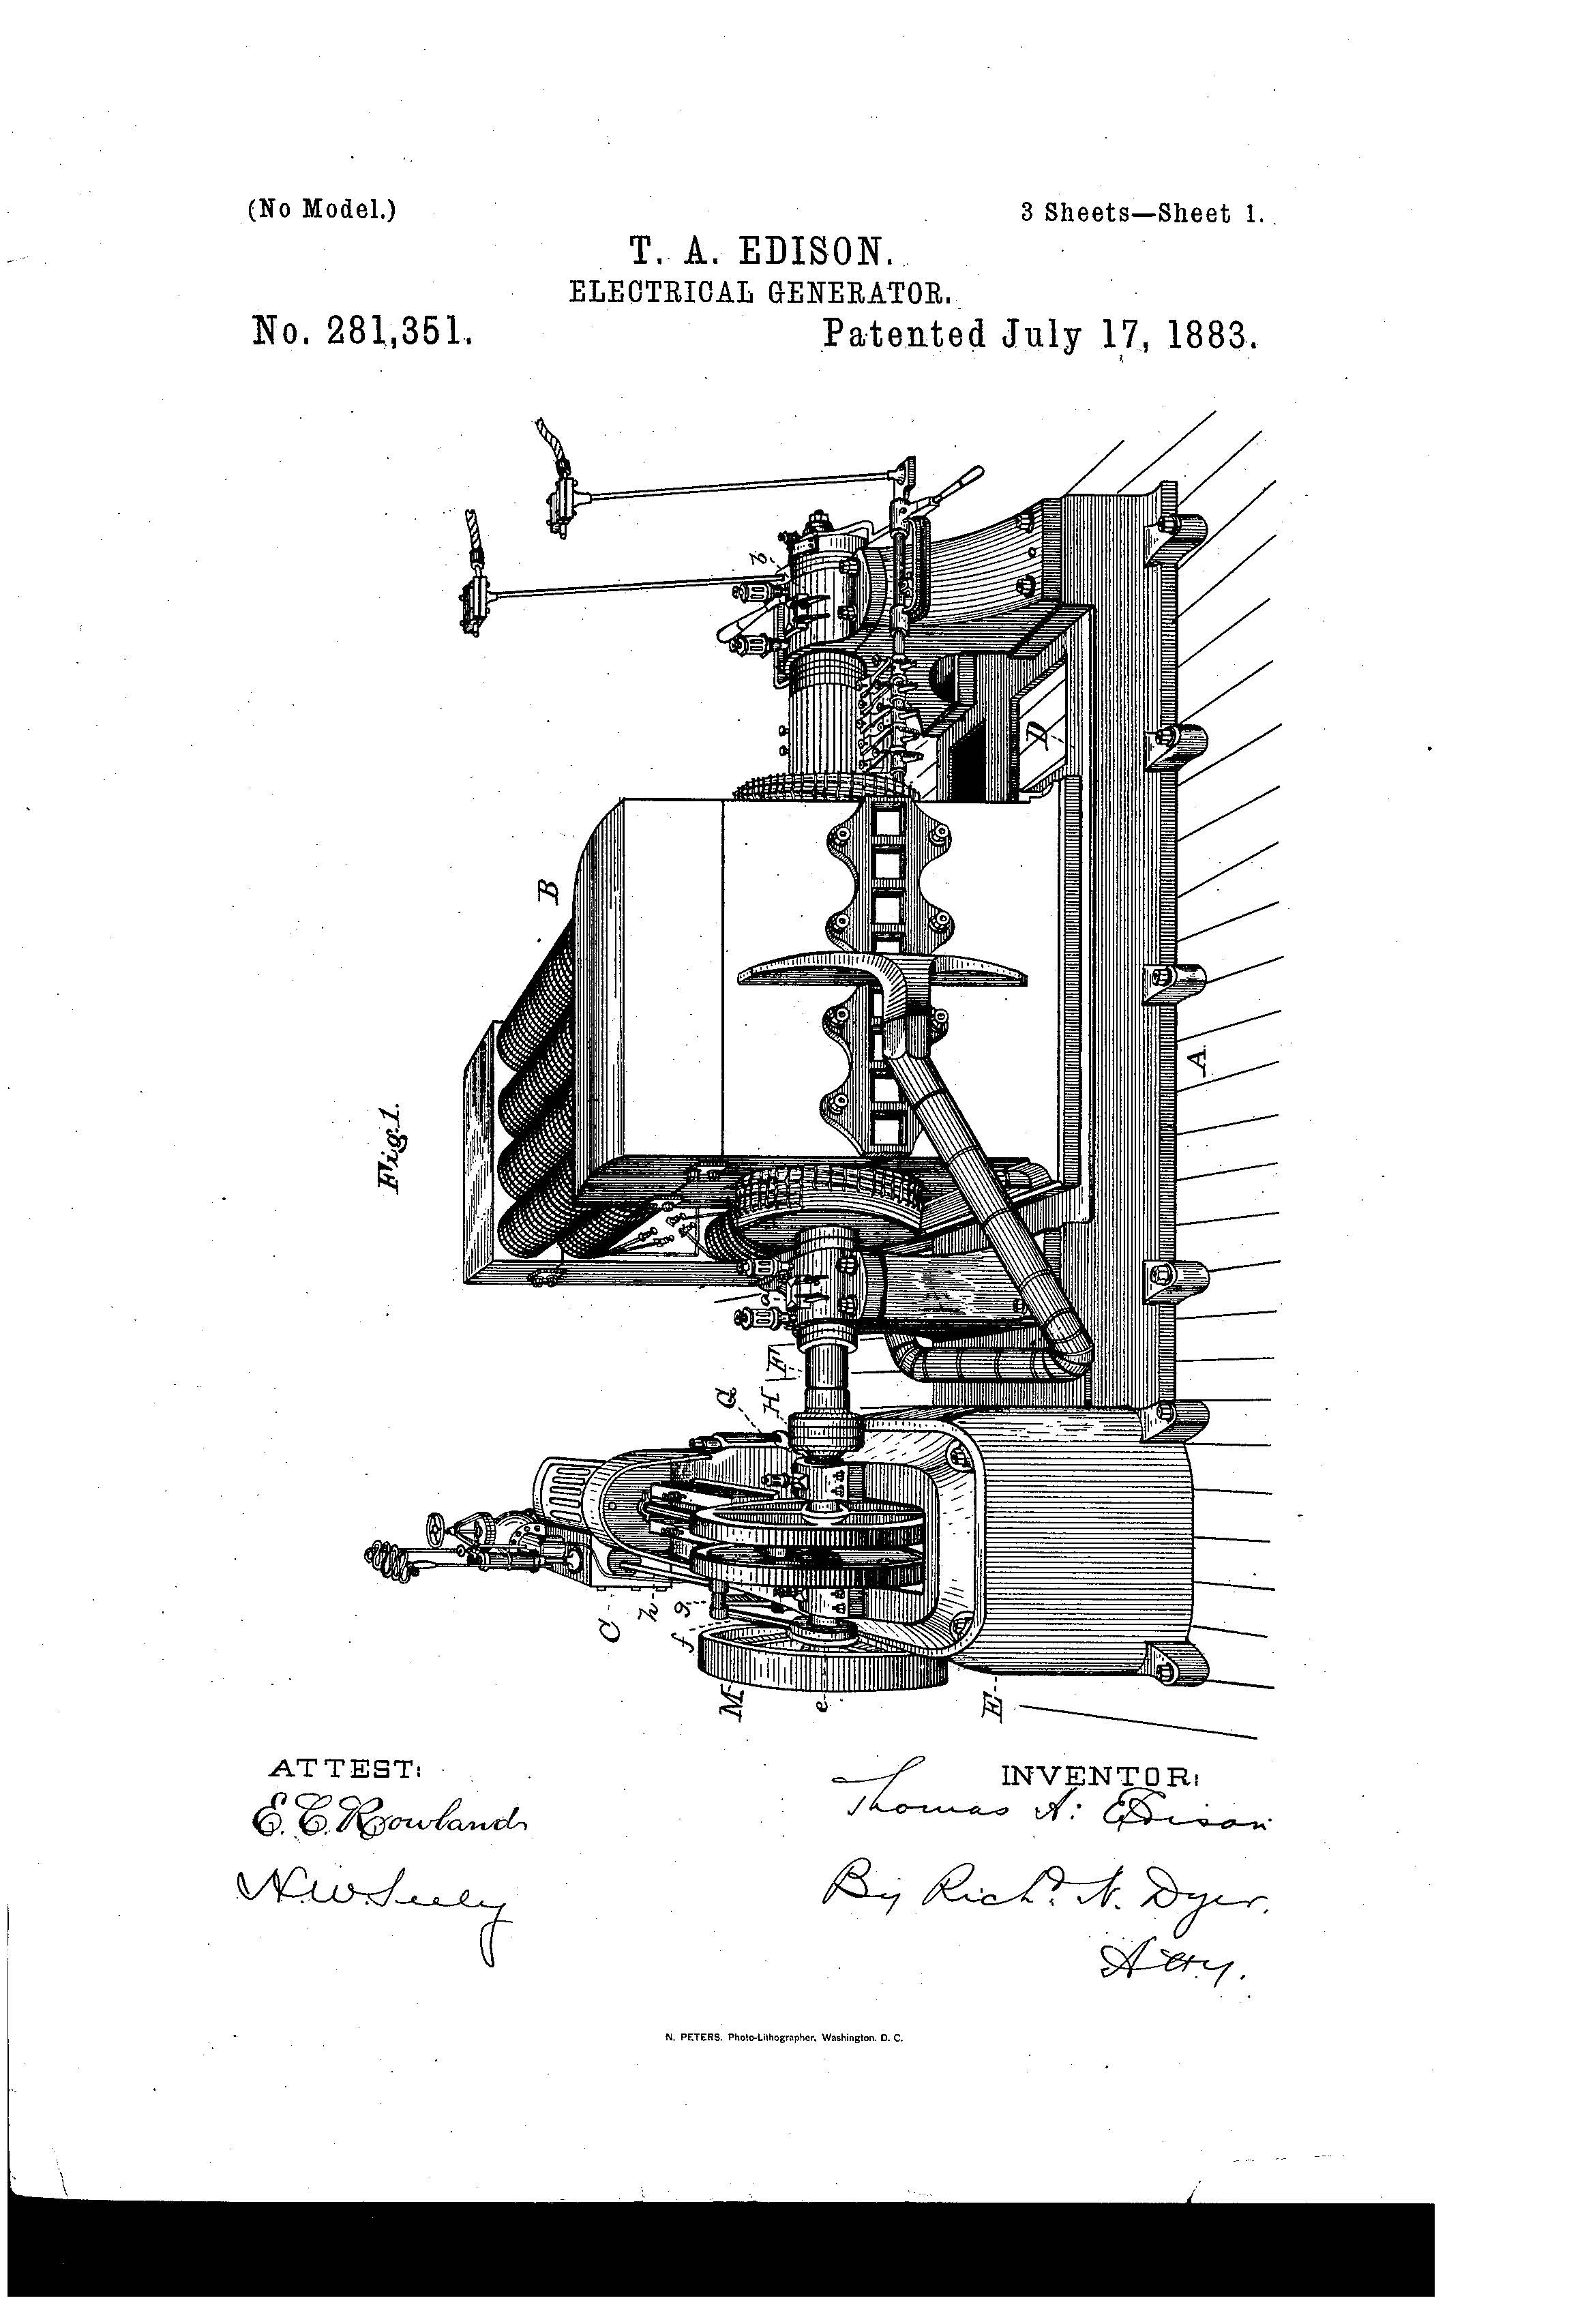 Electrical Generator Patent